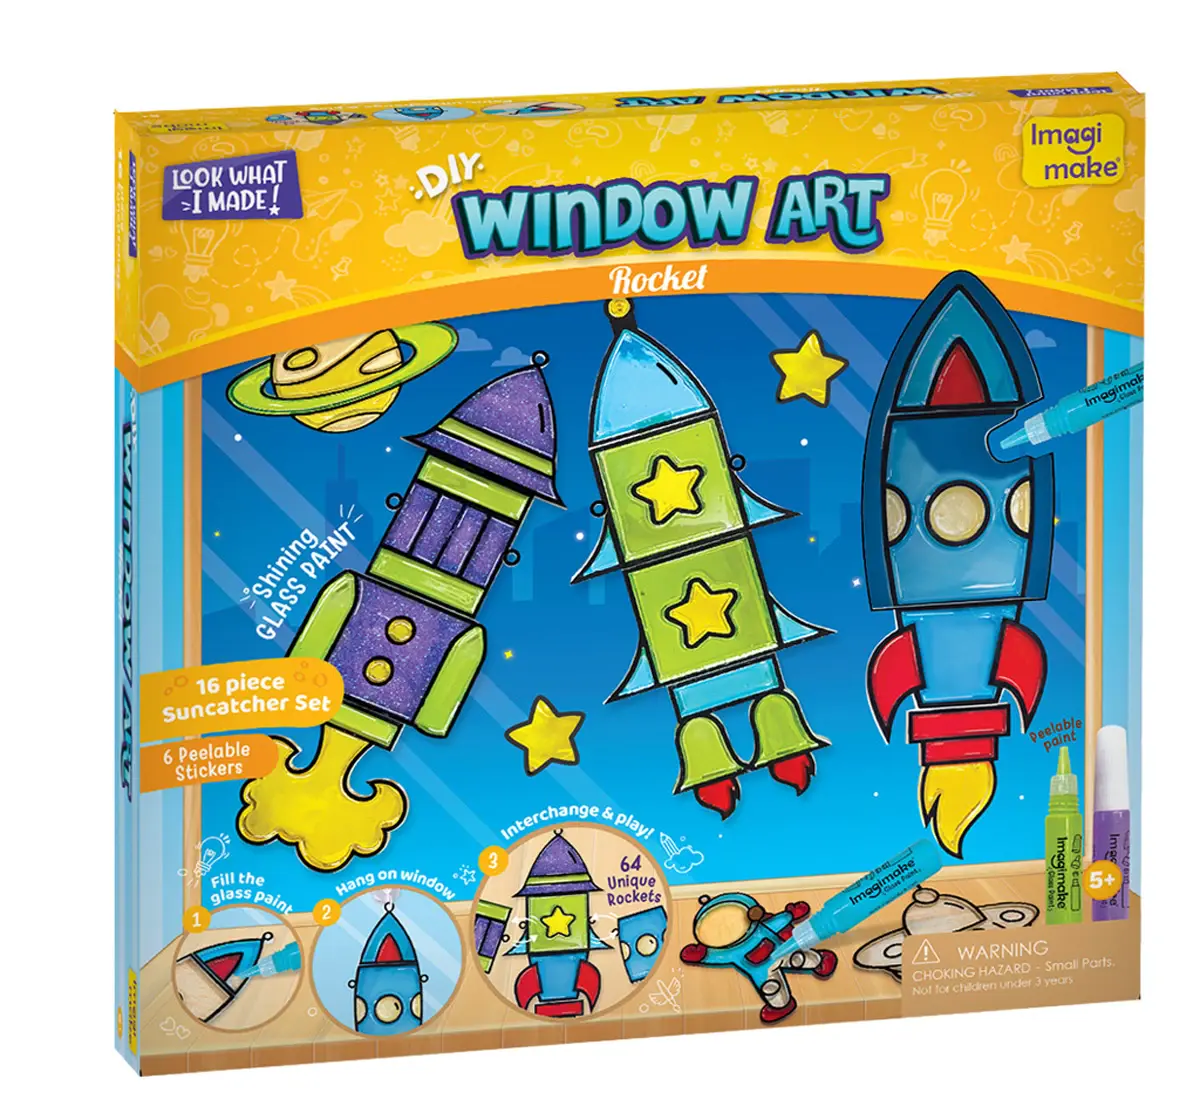 Imagimake Window Art Rocket Glass Painting Craft set for kids 5Y+, Multicolour